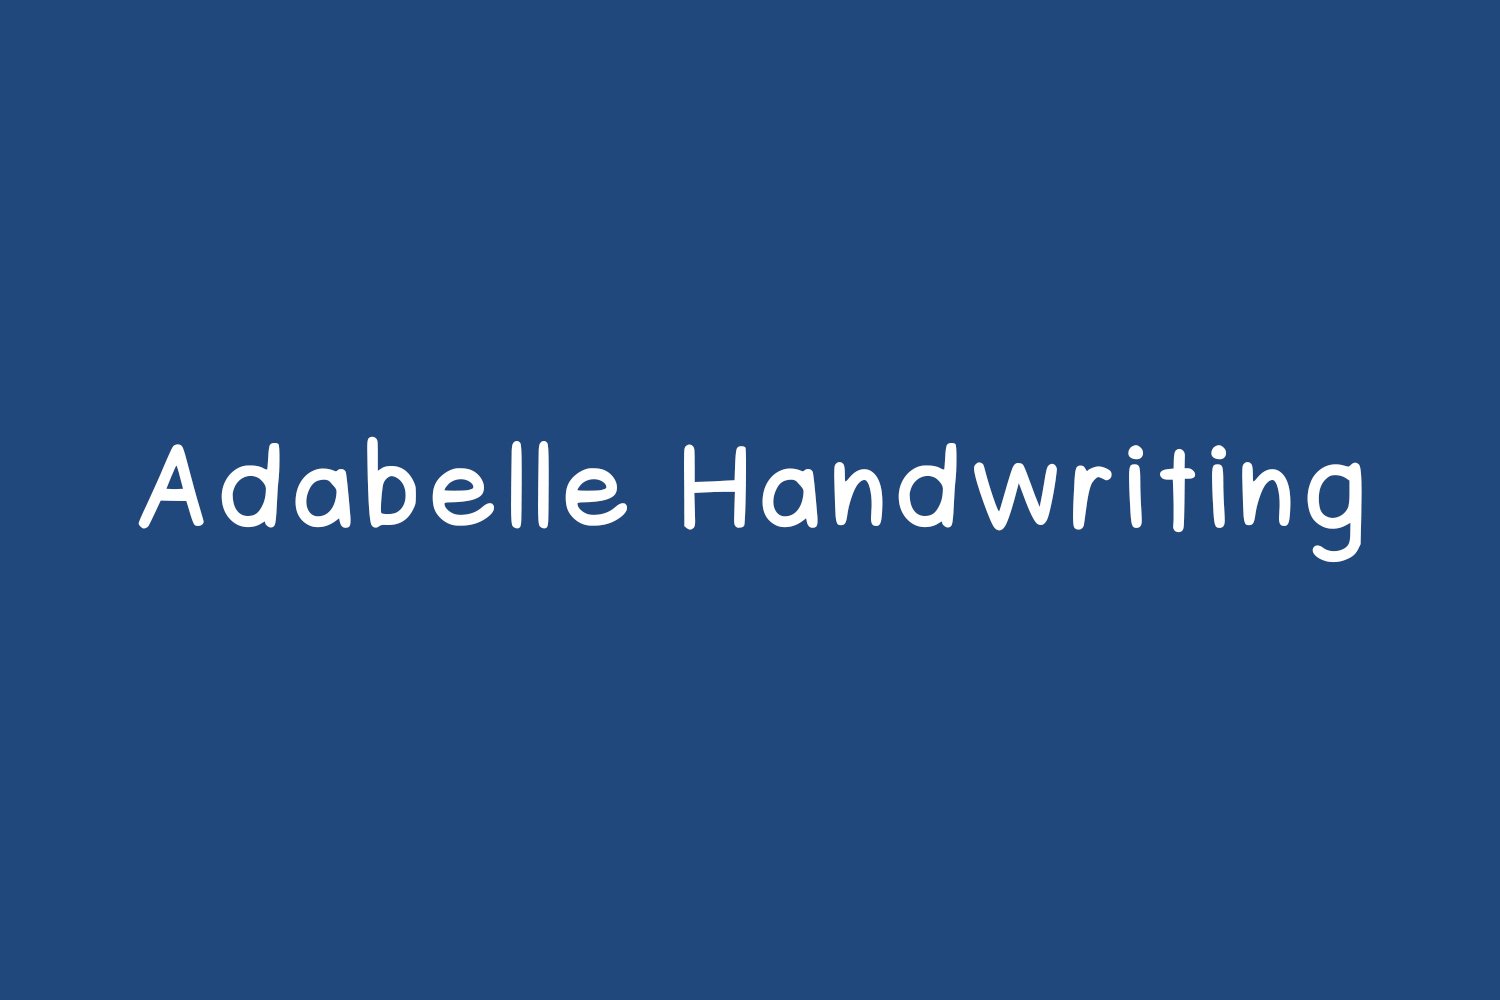 Adabelle Handwriting Free Font